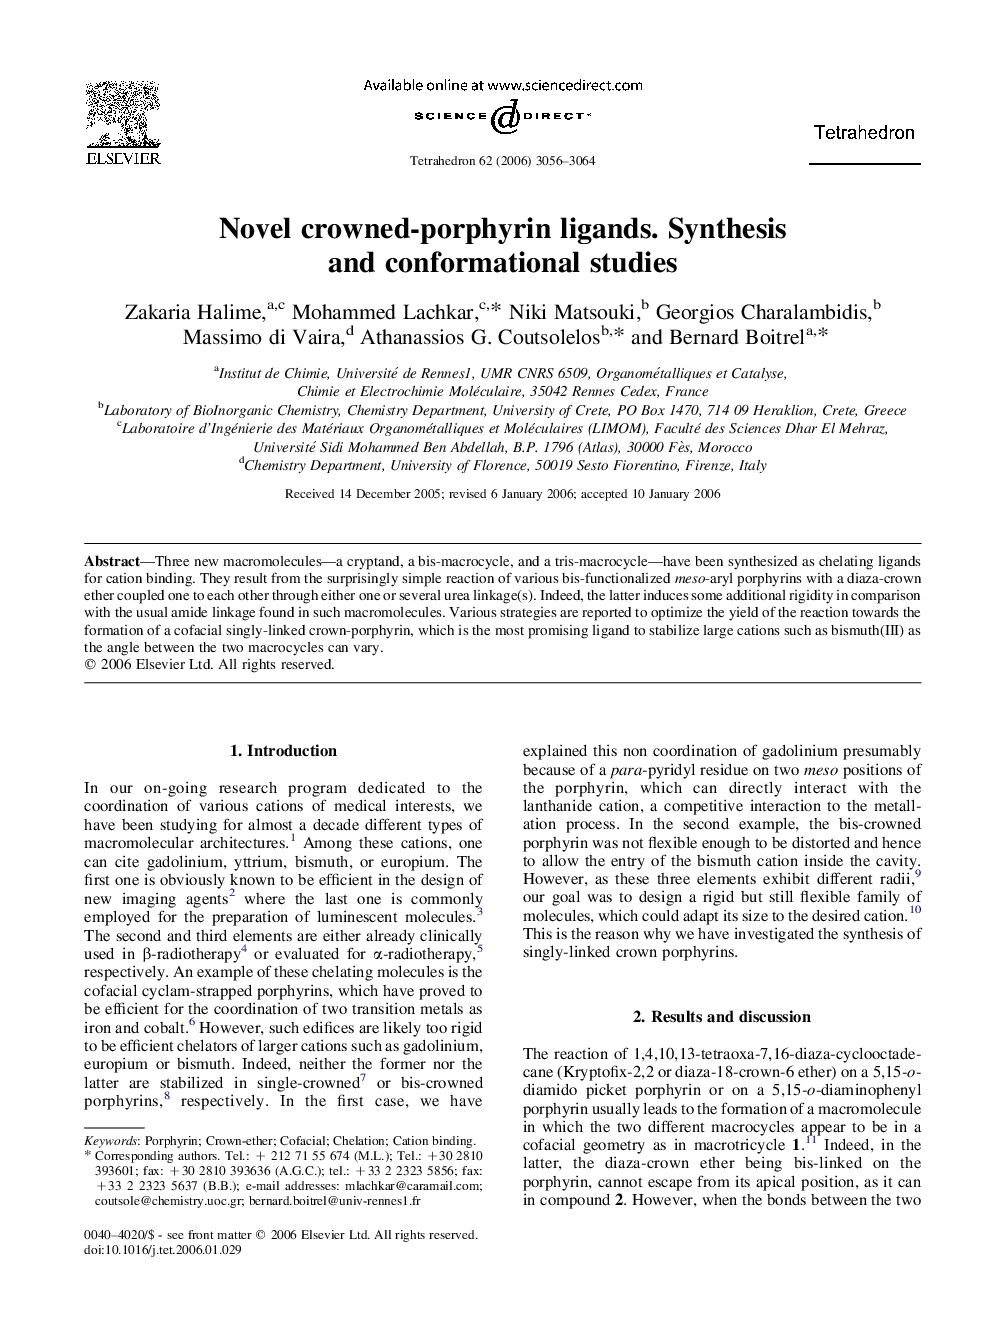 Novel crowned-porphyrin ligands. Synthesis and conformational studies